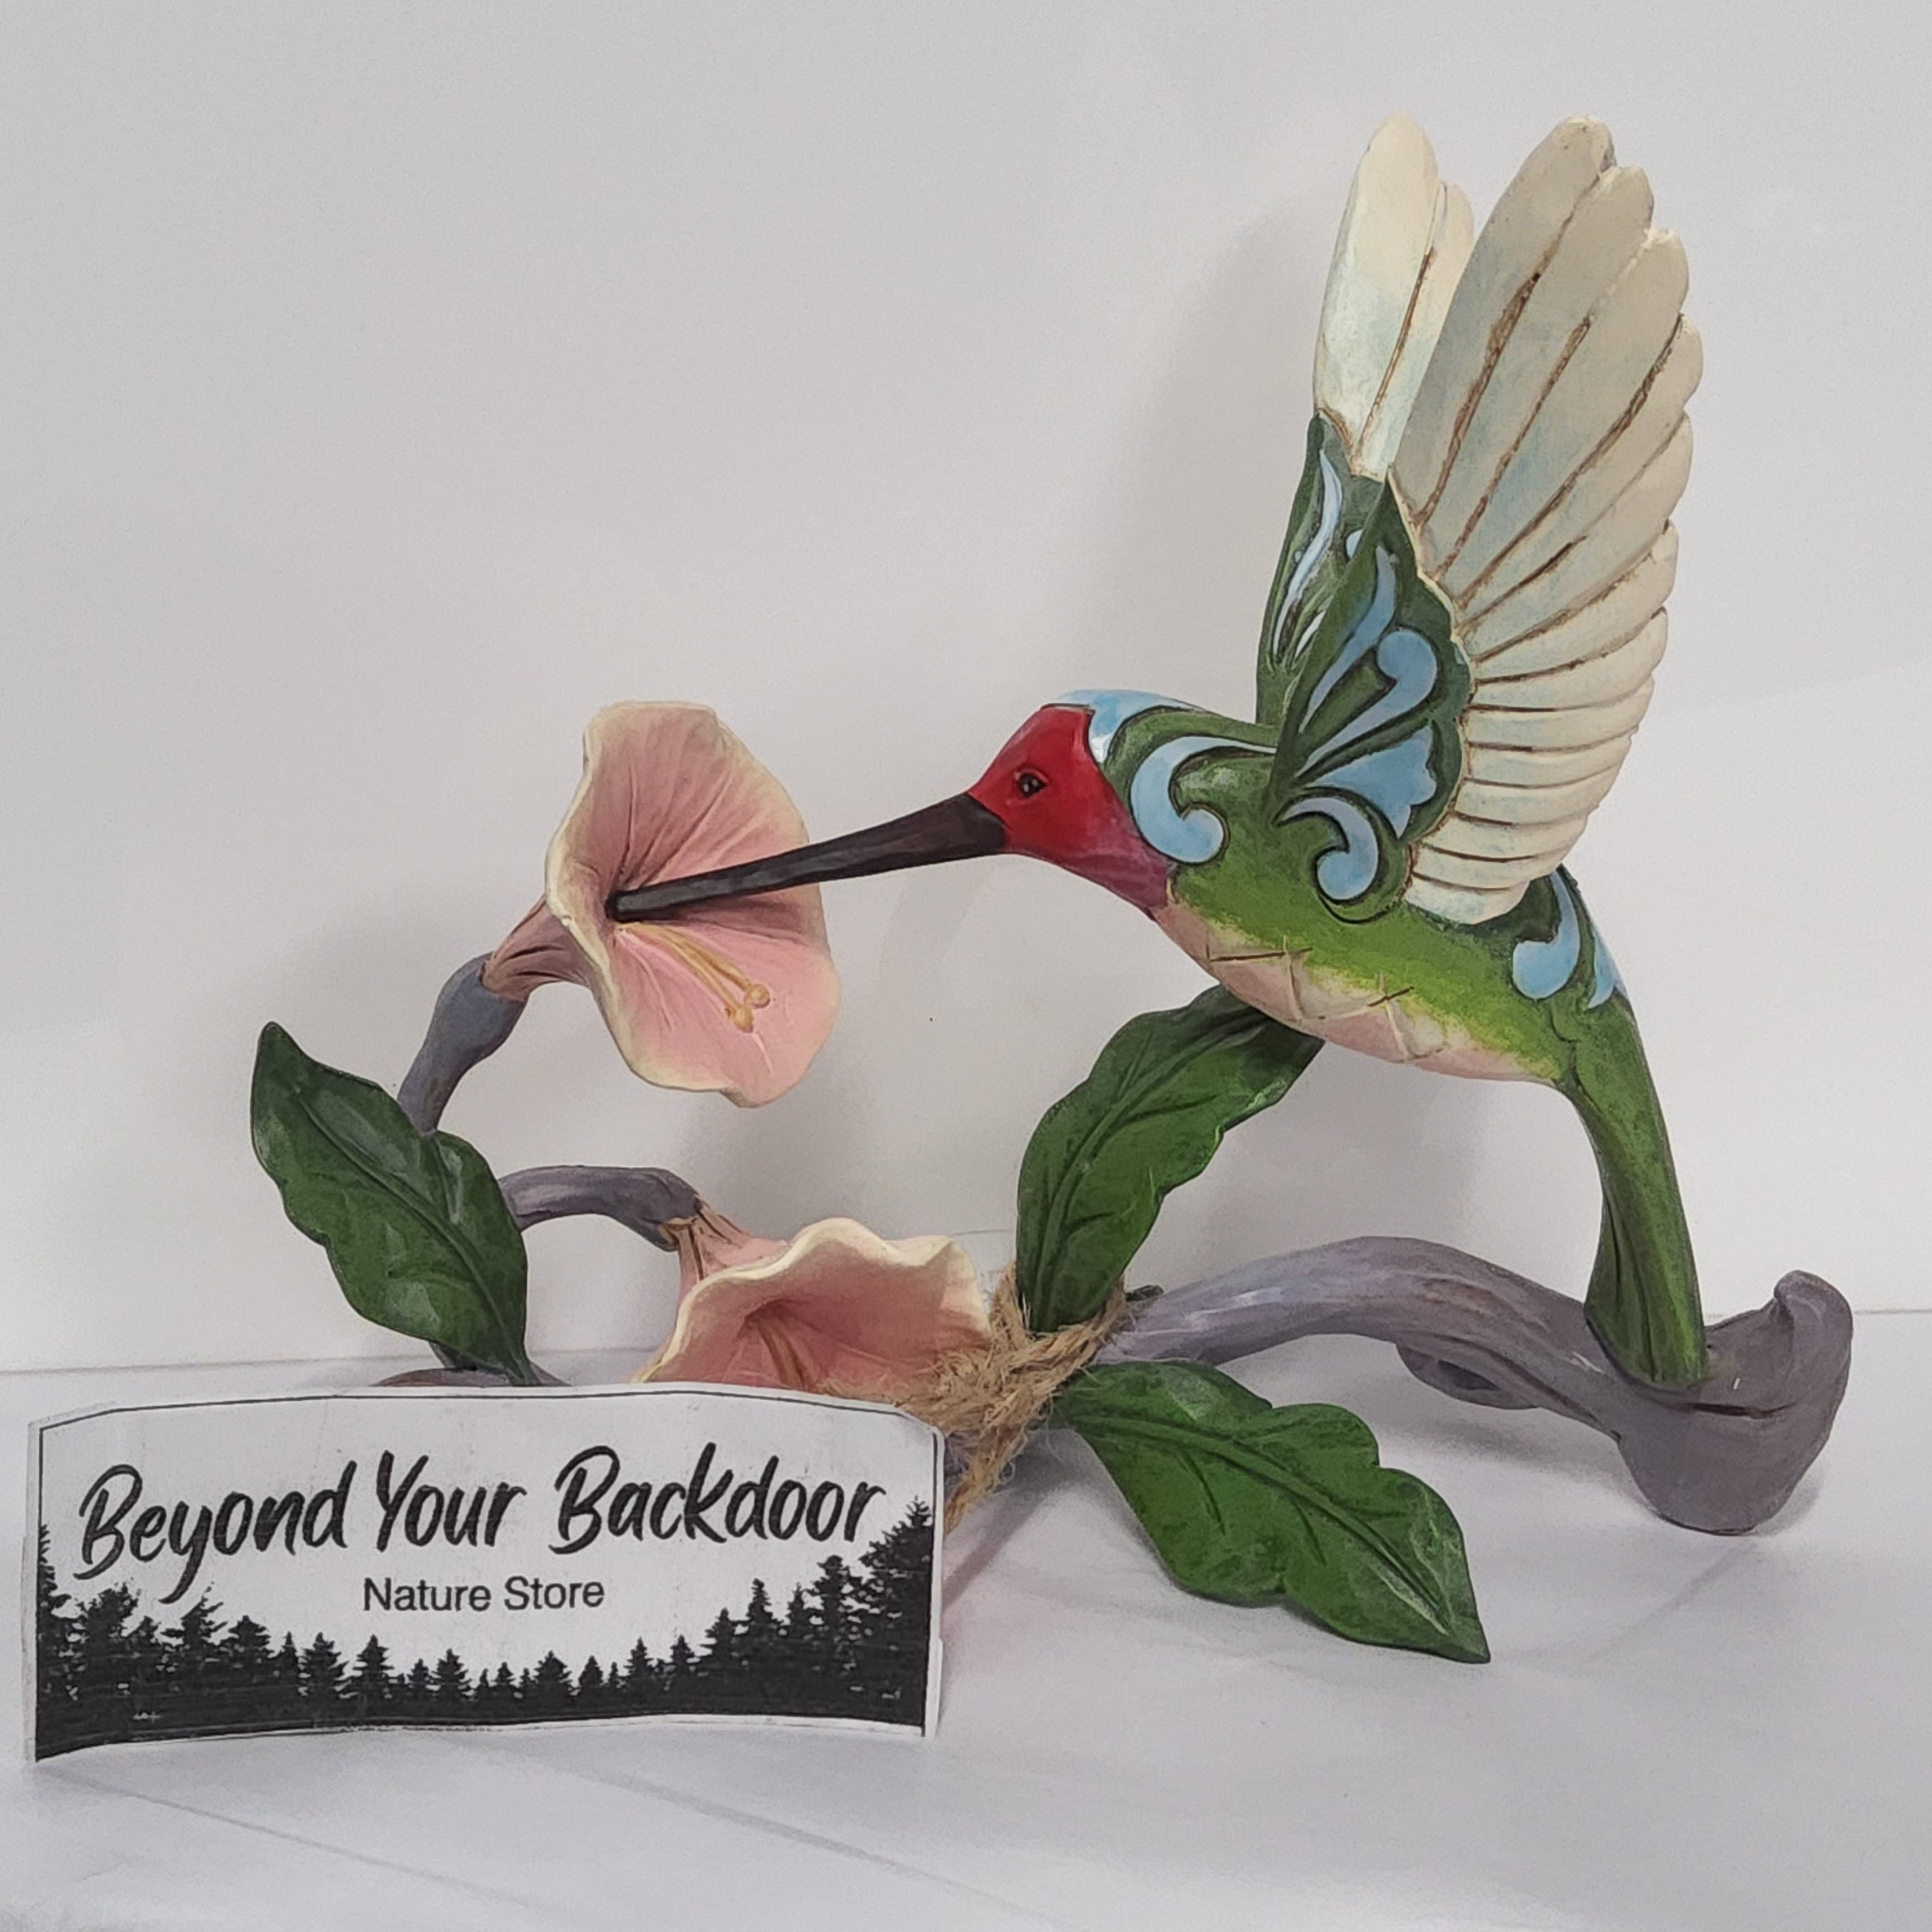 Enesco / Jim Shore Bird Figurine - Hummingbird - "Blossoms and Beauty" 6008417